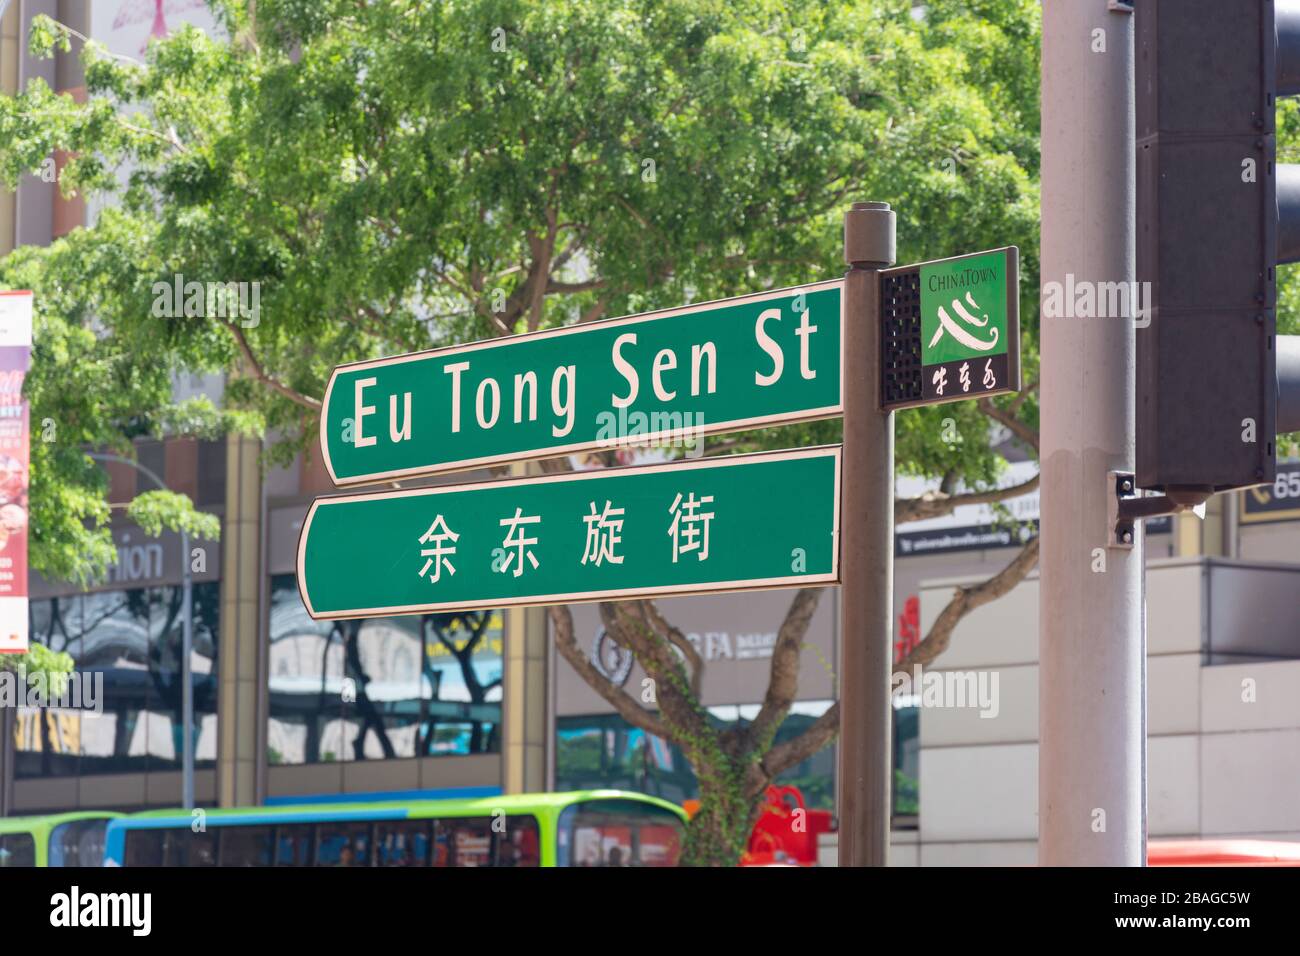 English and Chinese street sign, Eu Tong Sen Street, Chinatown, Republic of Singapore Stock Photo